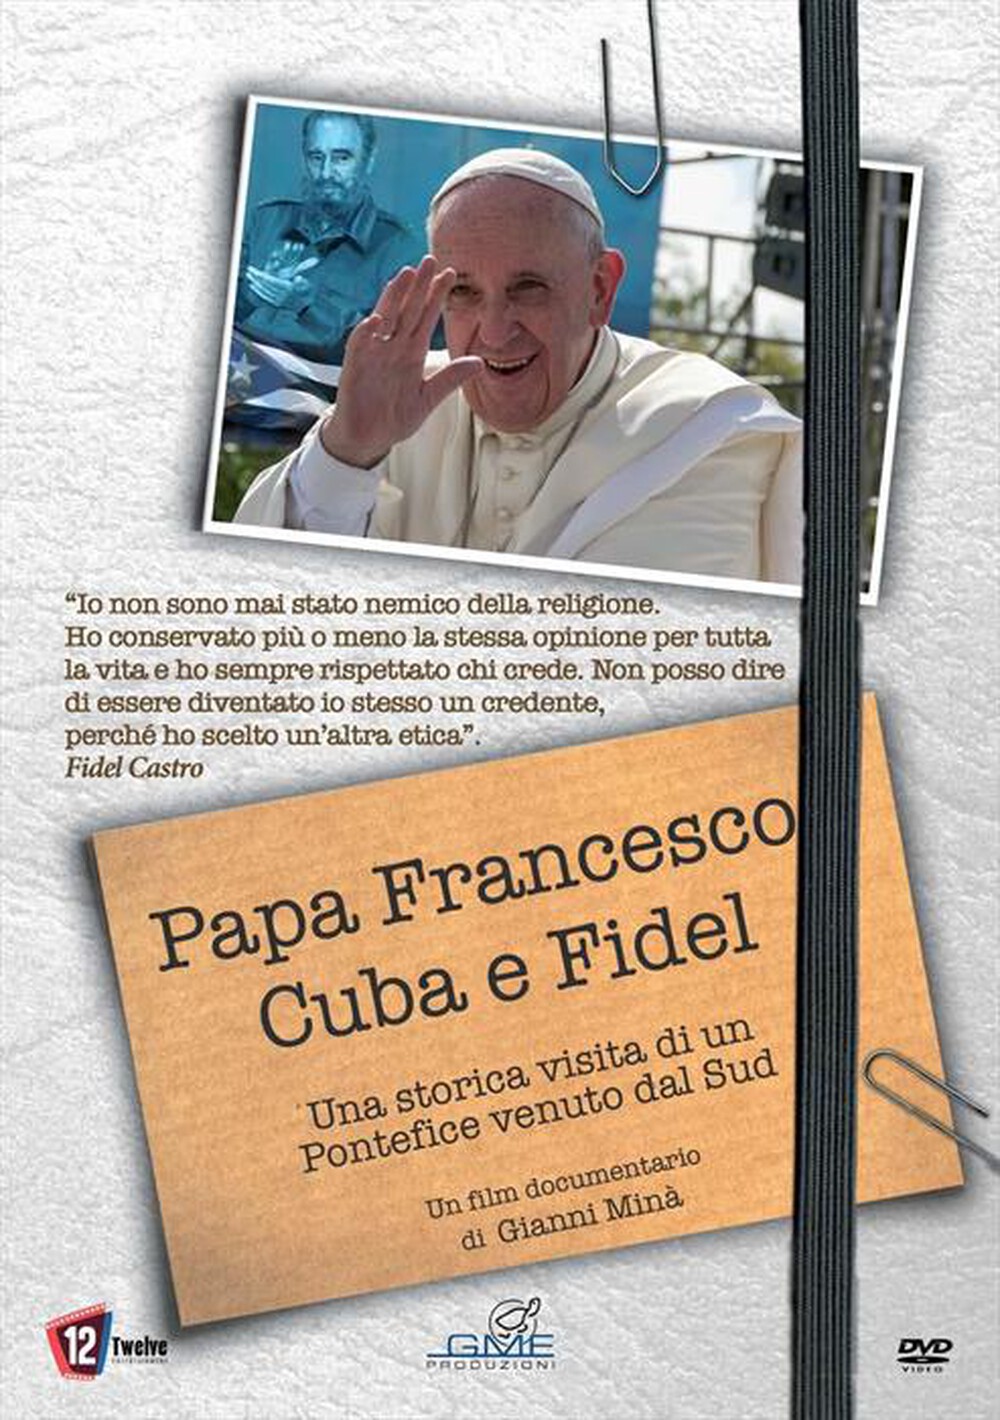 "Twelve Entertainment - Papa Francesco, Cuba E Fidel"